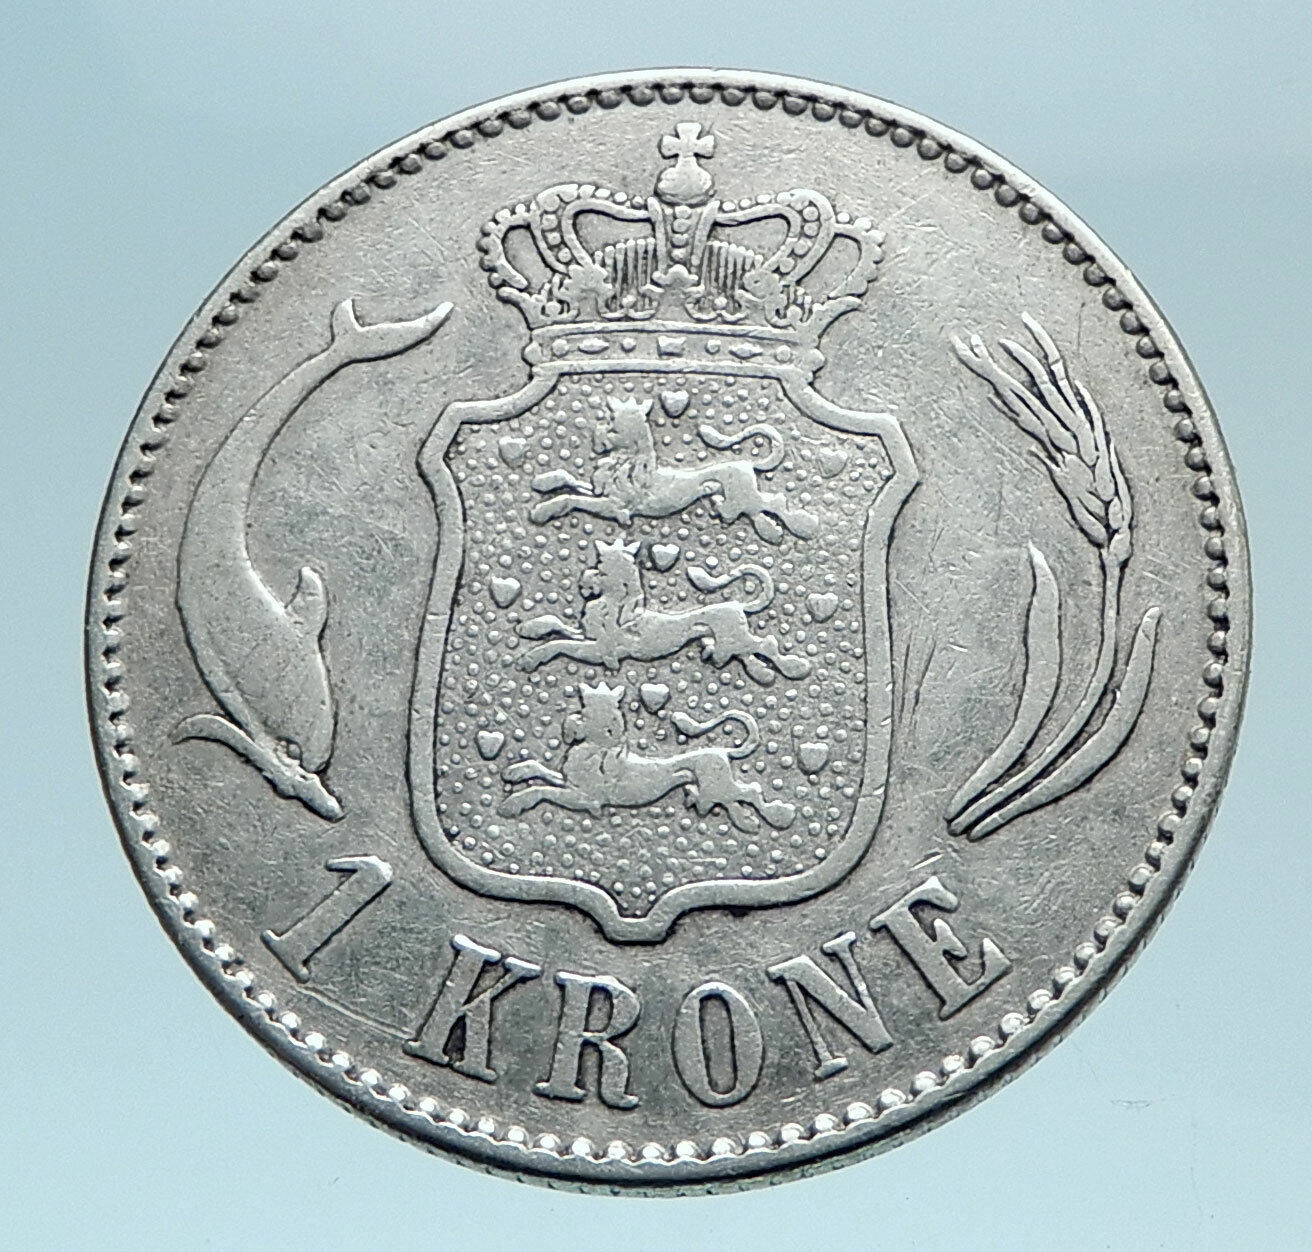 1915 DENMARK King CHRISTIAN X Crown Genuine Antique Silver 1 Krone Coin i78295